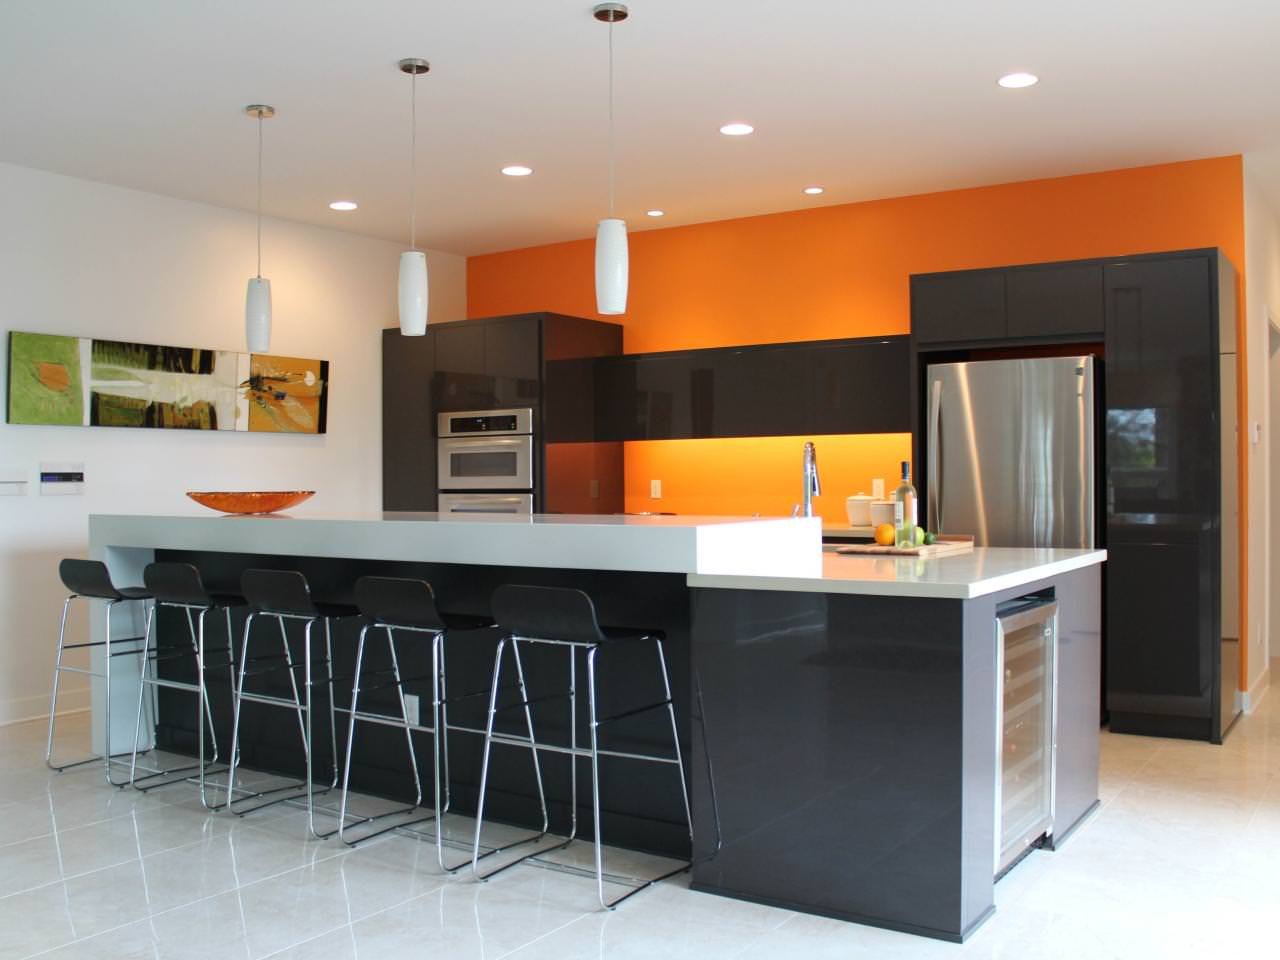 Parete ed paraschizzi cucina in arancione ed i mobili di colore bianco e nero - idee cucine moderne senza piastrelle